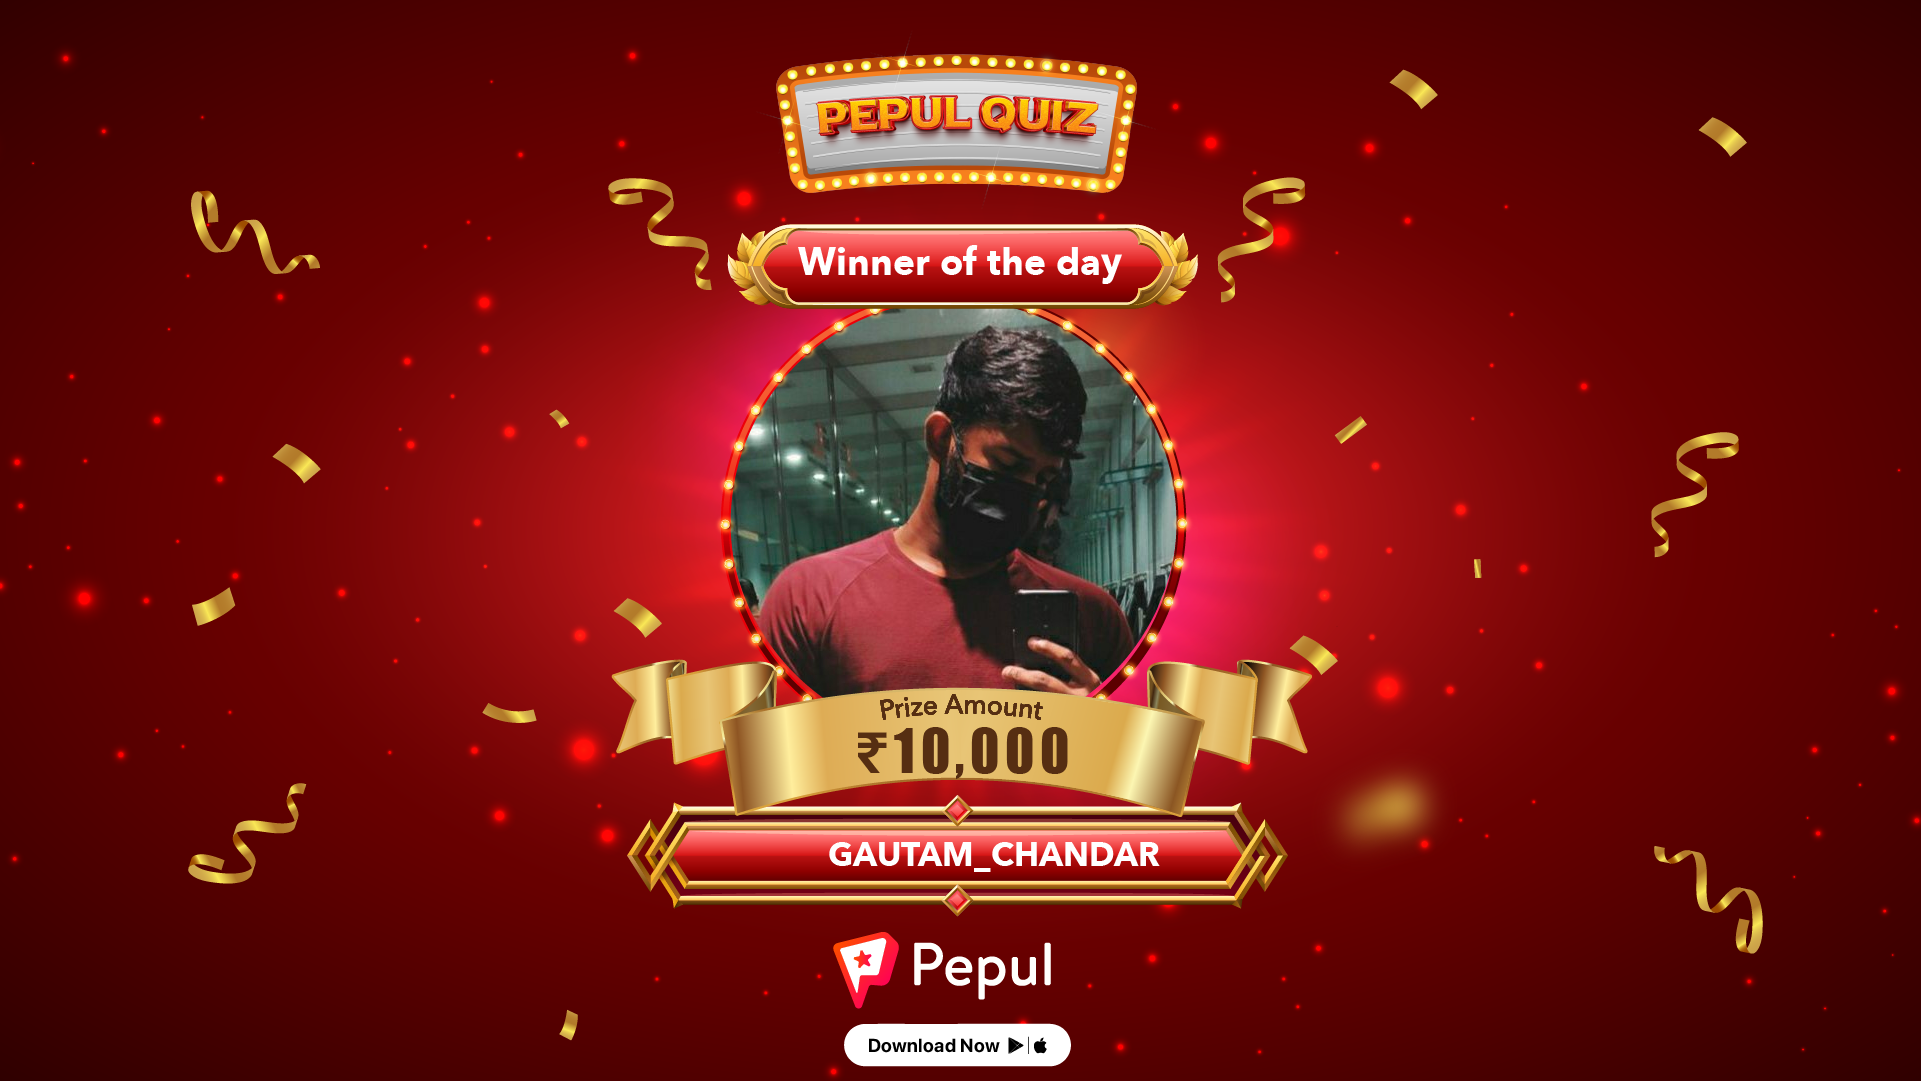 Pepul Quiz Winner (Gautam Chandar) – Testimonial